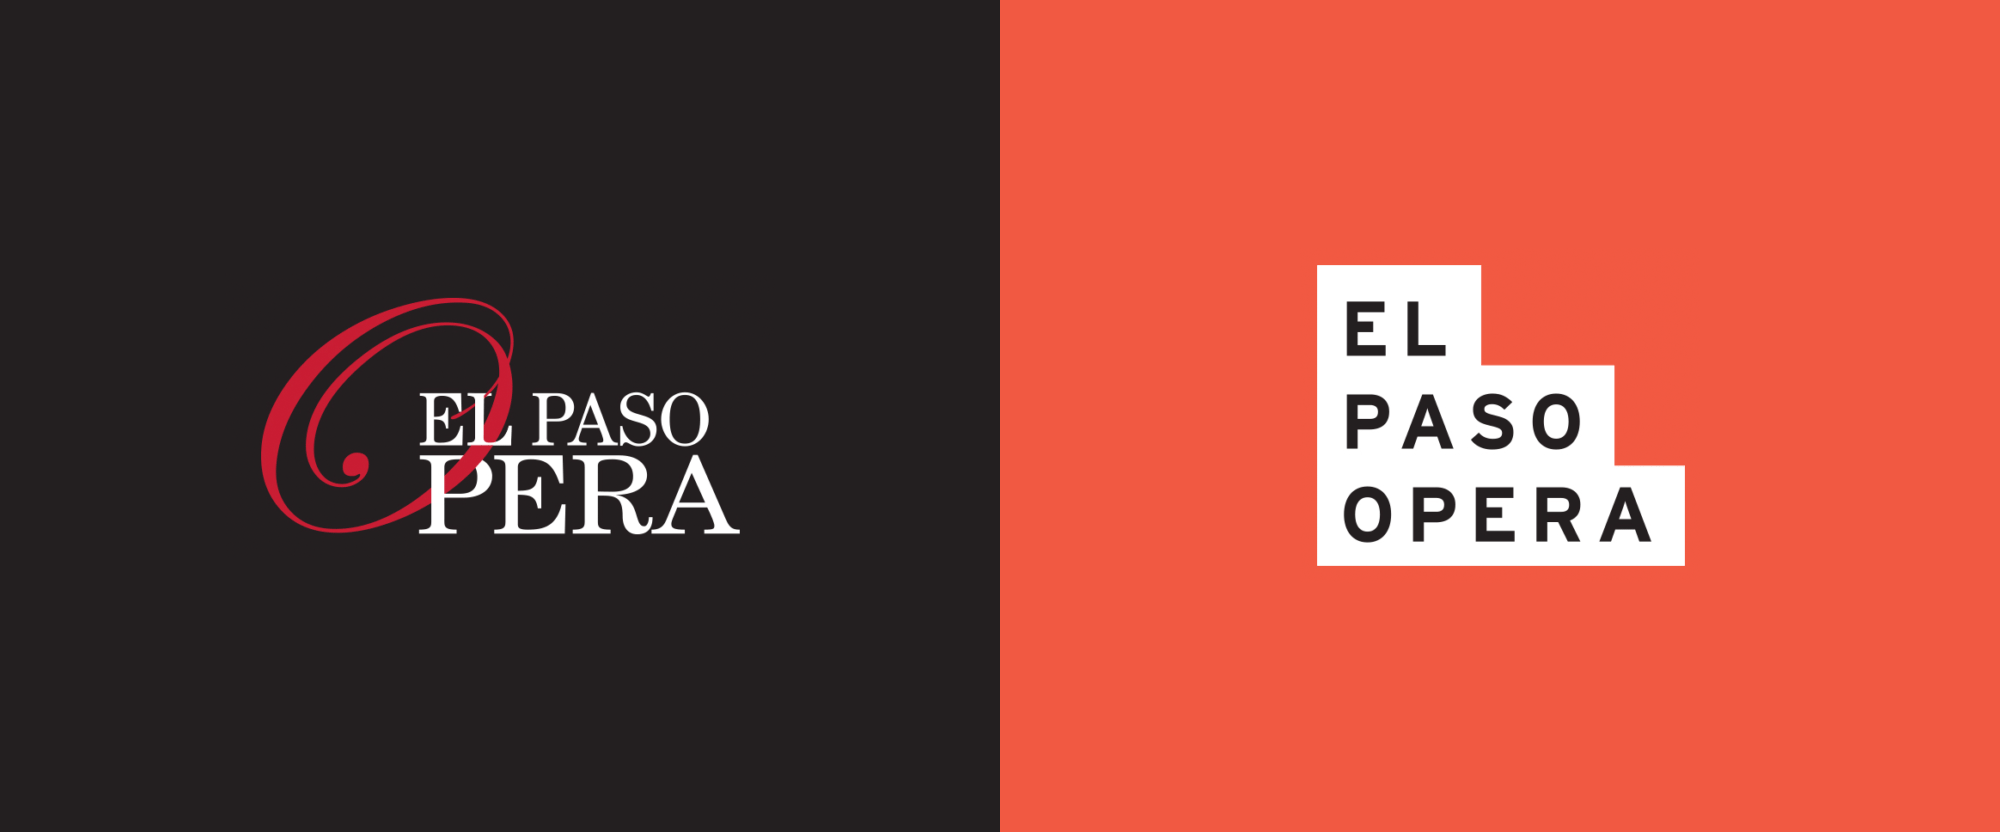 New Logo and Identity for El Paso Opera by Mast